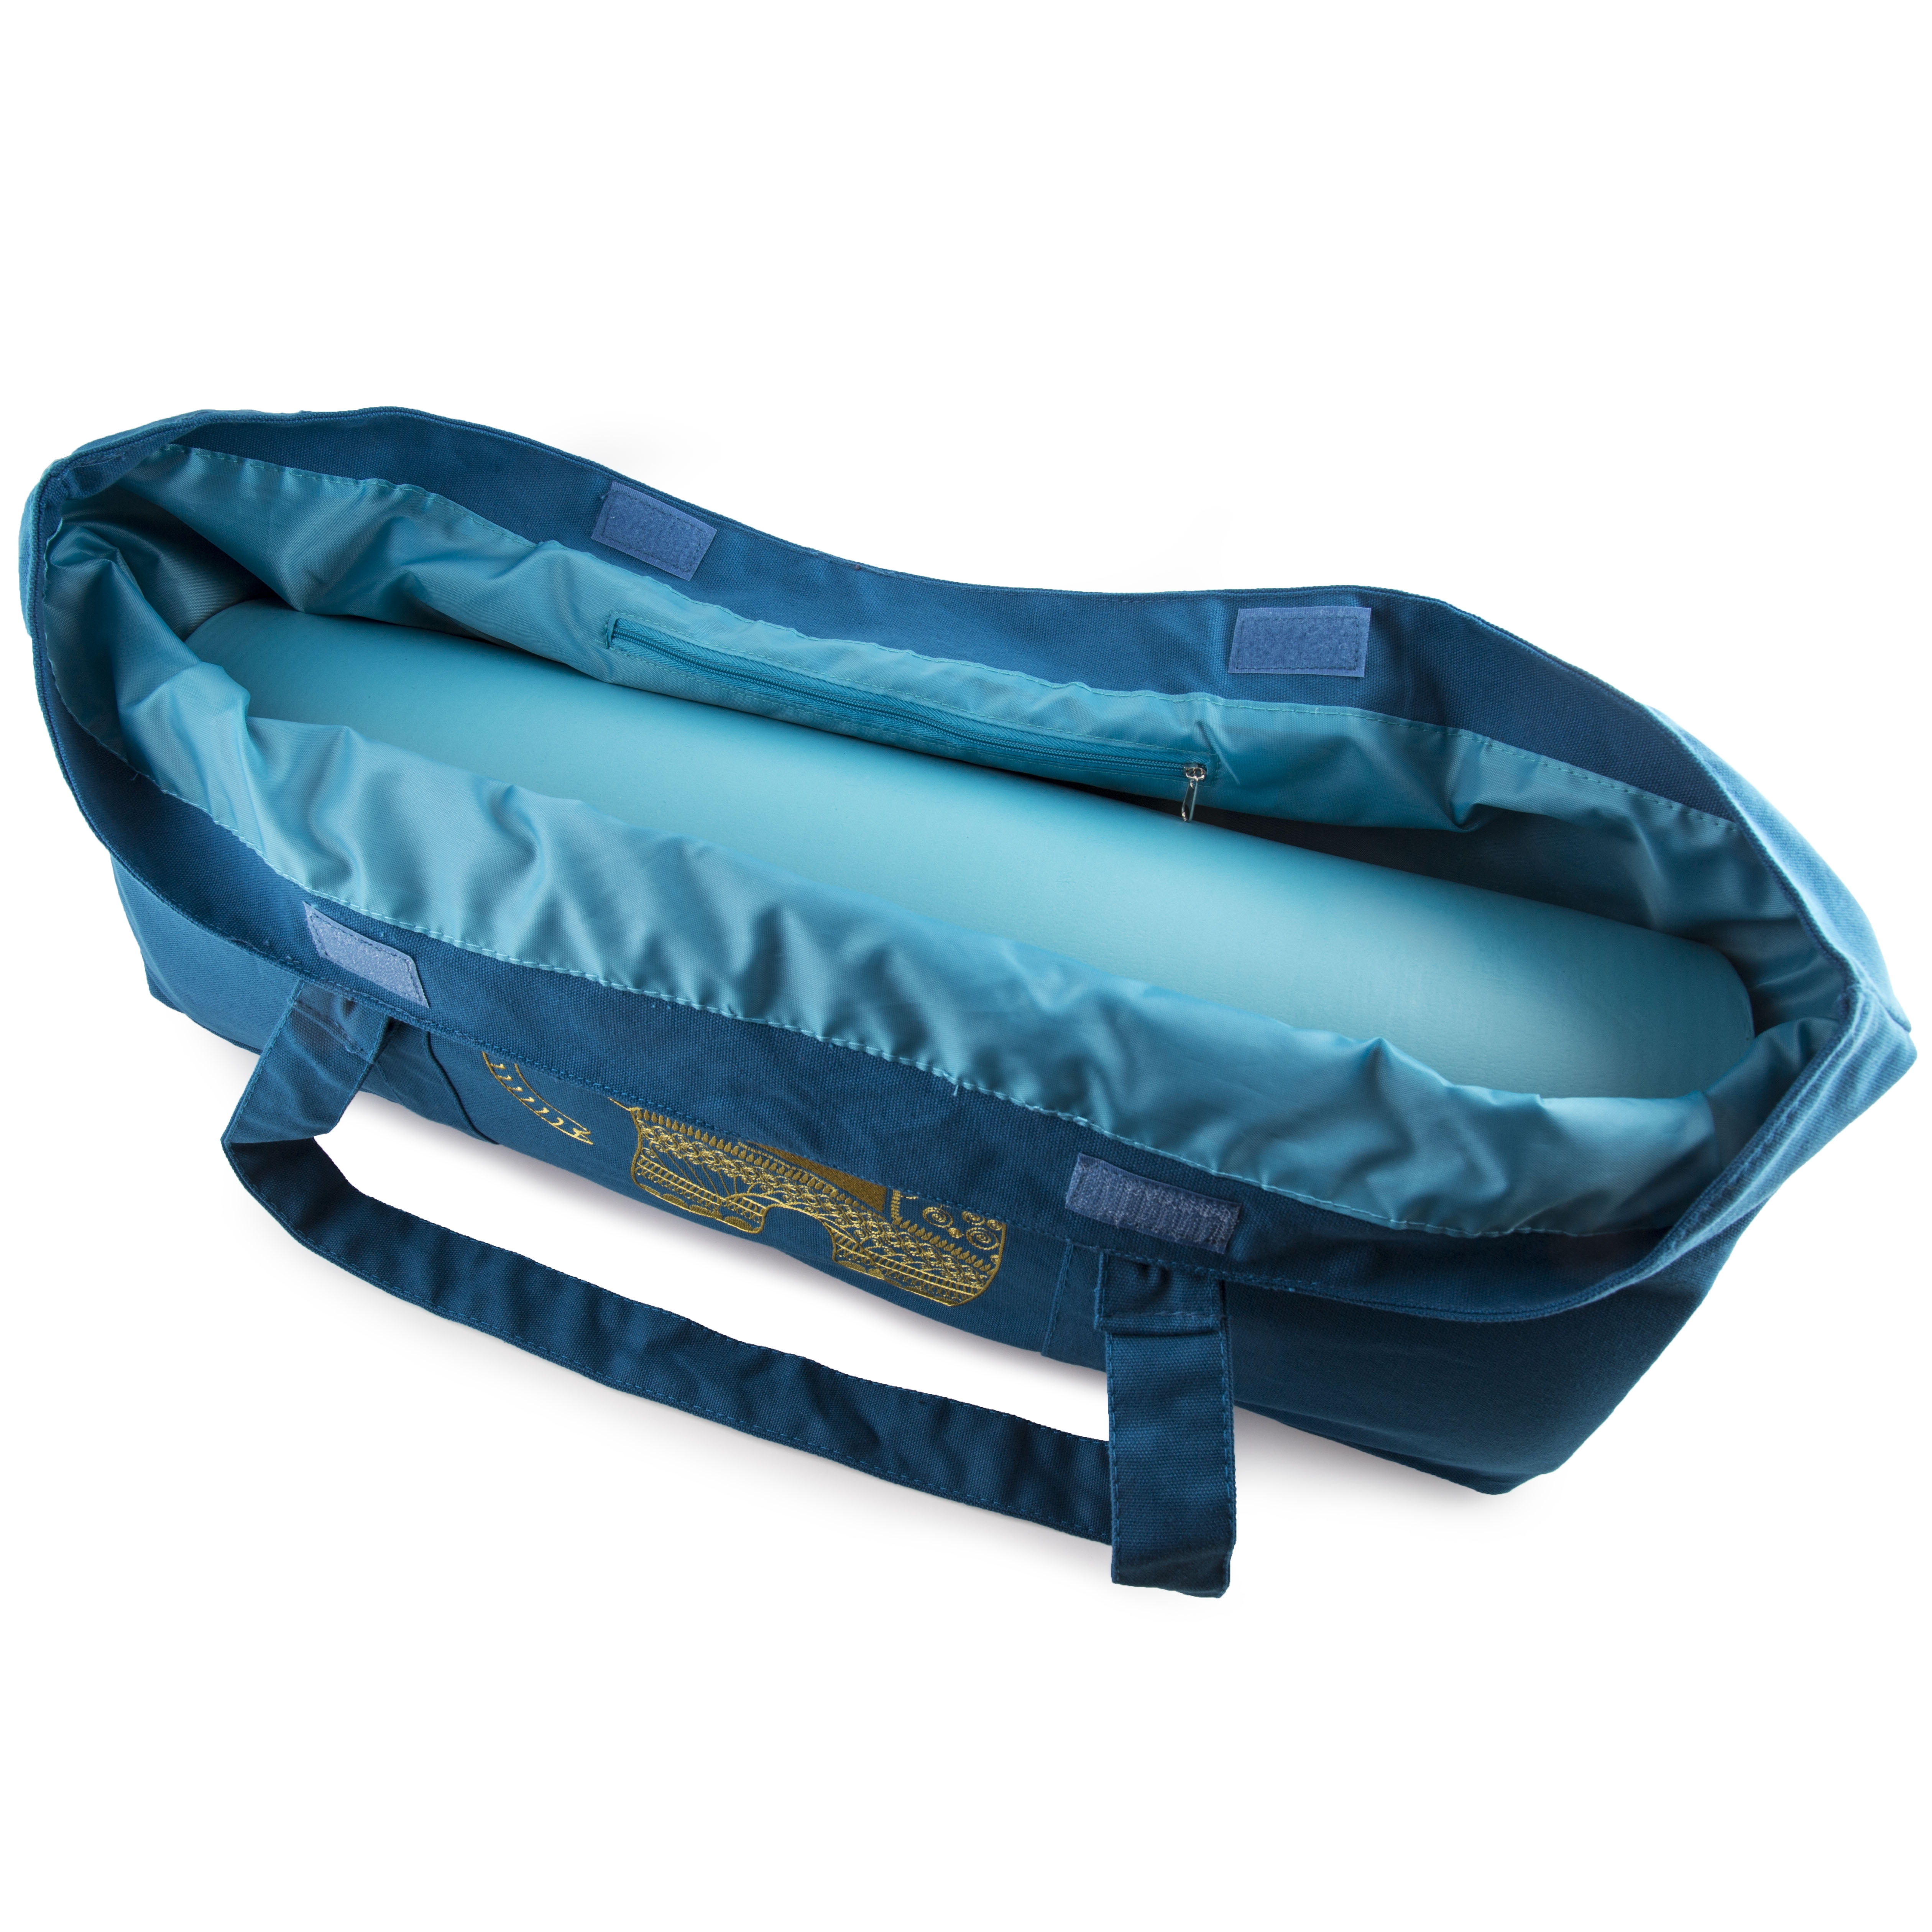 Maatir Beach Bag Hand Bag Plastic Large Blue Tote Bag, Plastic Koodai Waterproof Shoulder Bag